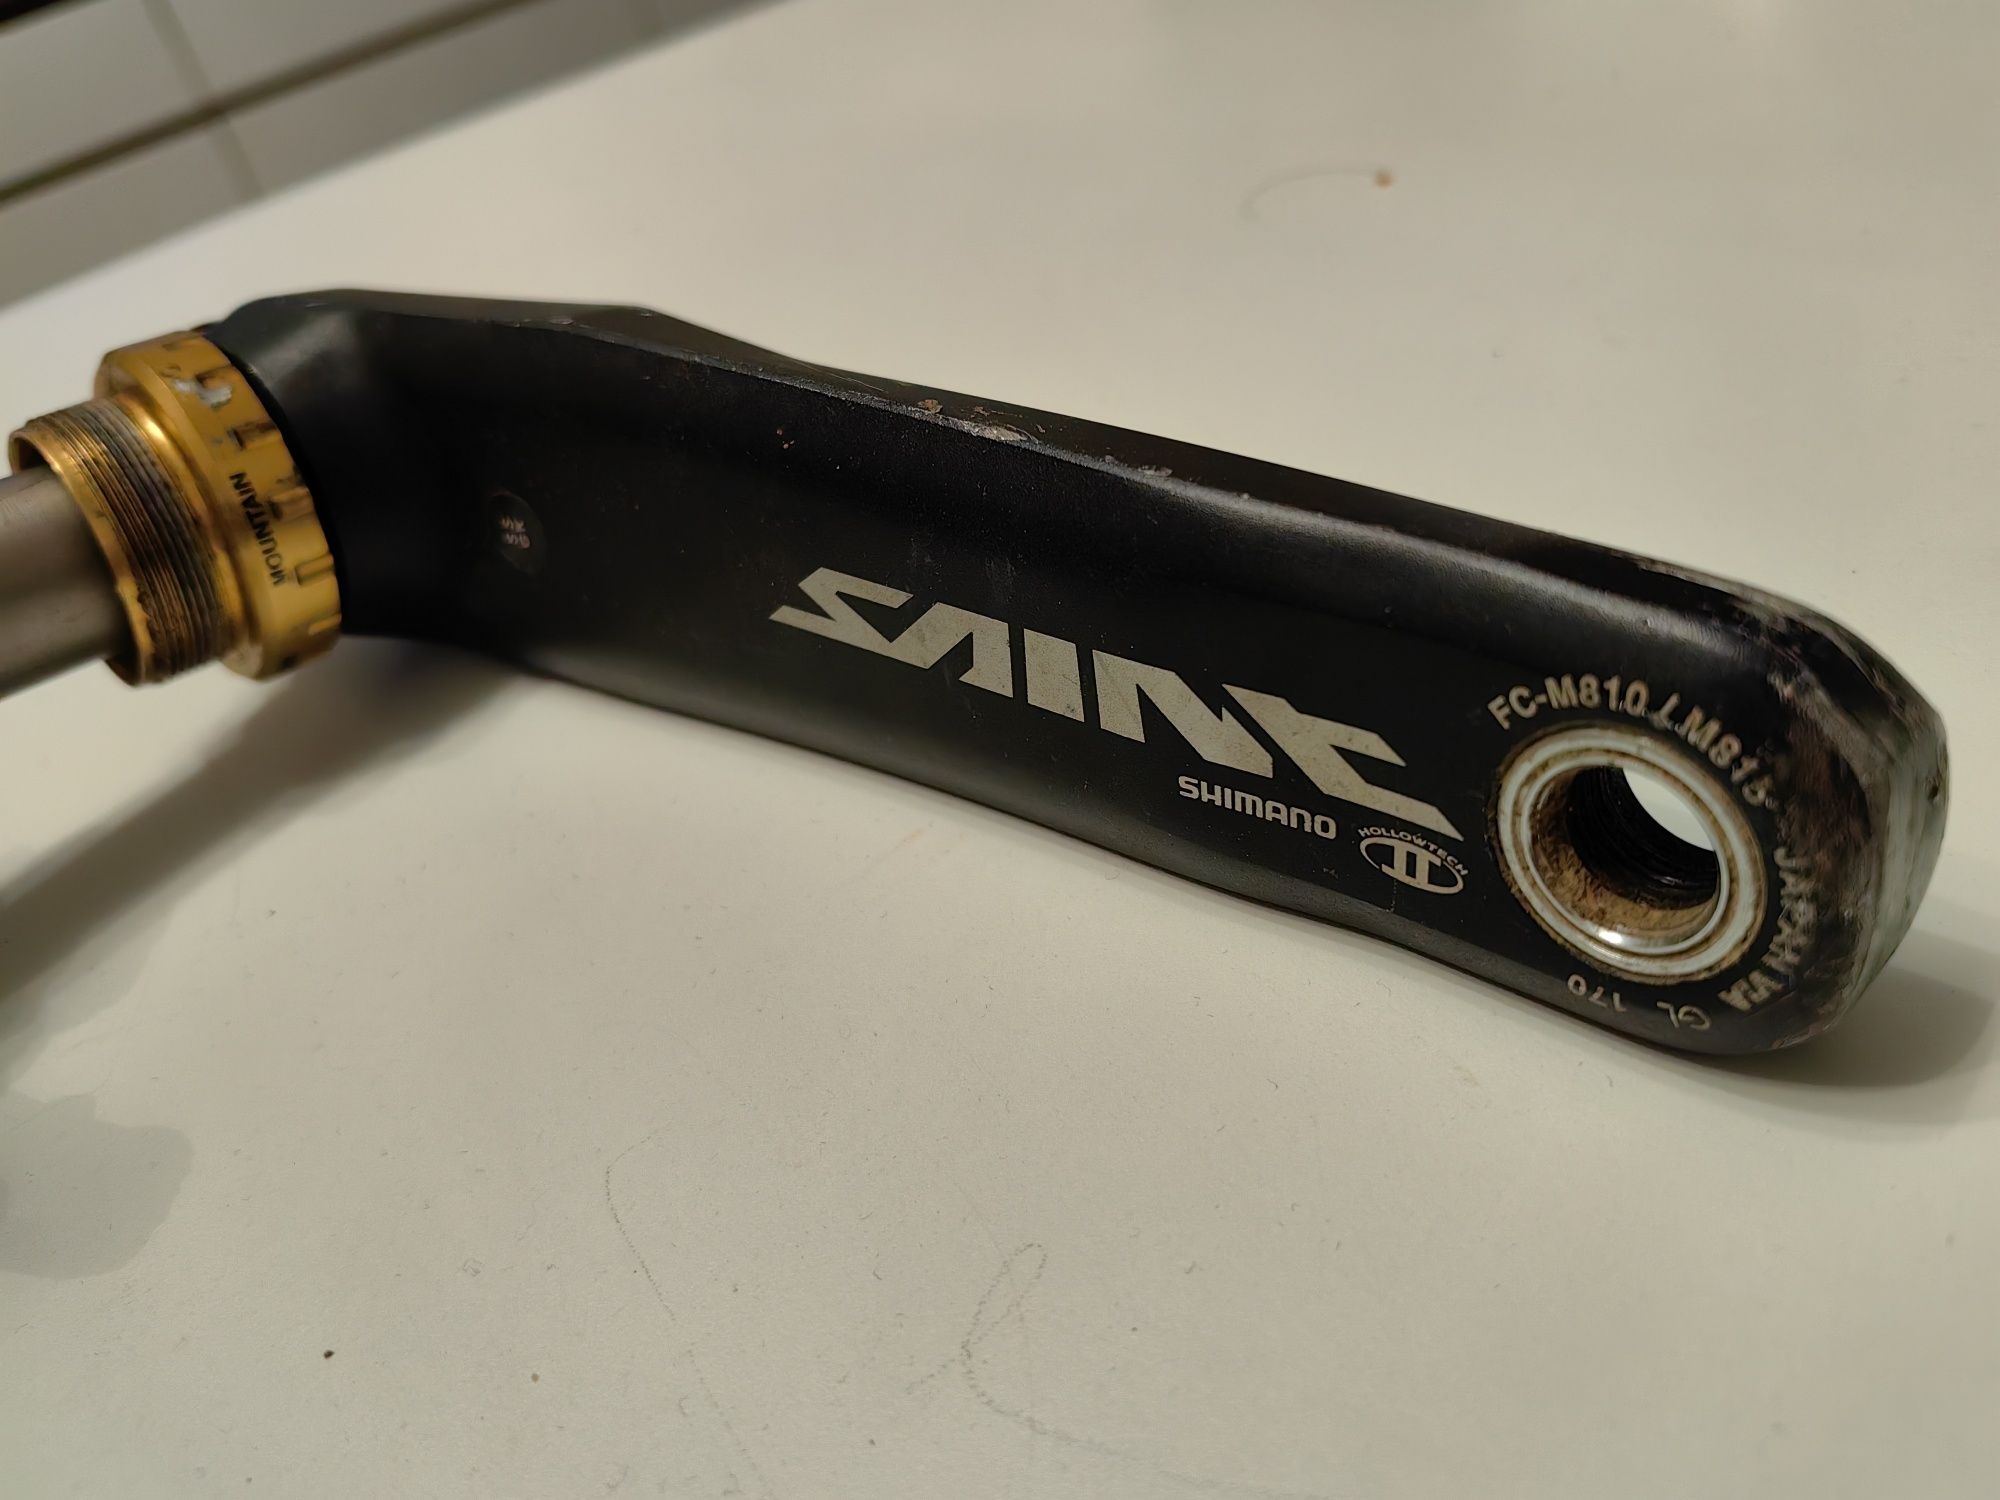 Angrenaj Shimano Saint FC-M825
Utilizare: MTB Downhill/Freeride
Group: